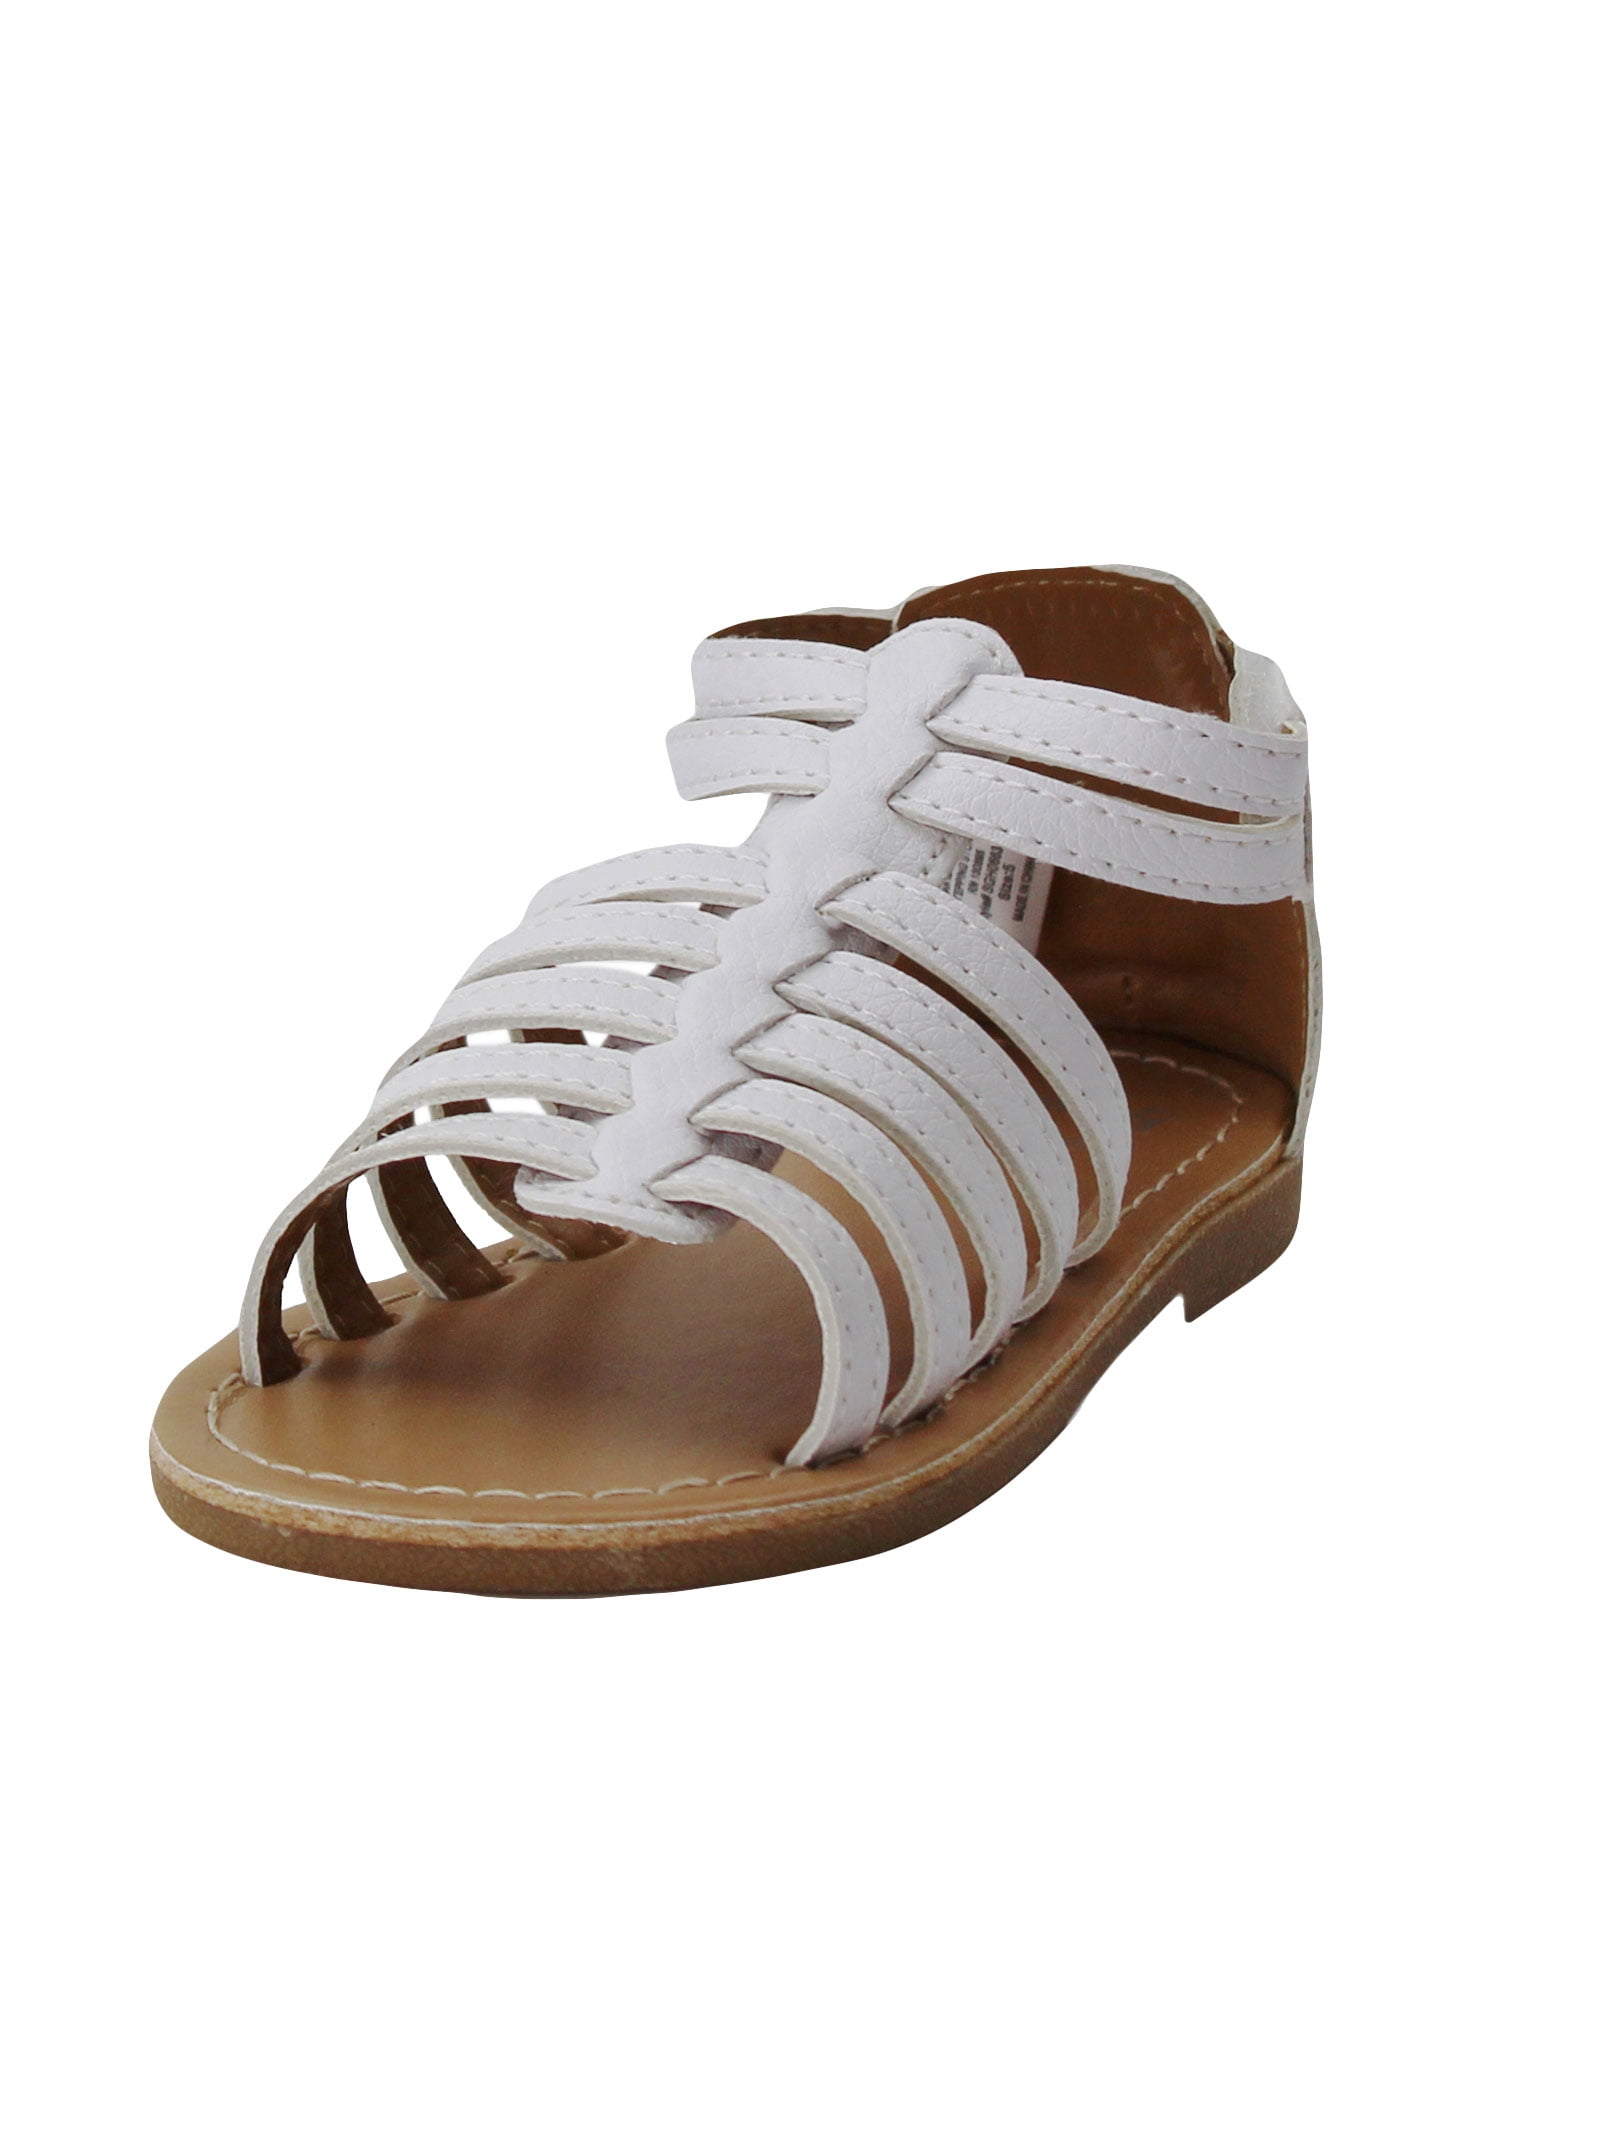 girls white sandals size 3